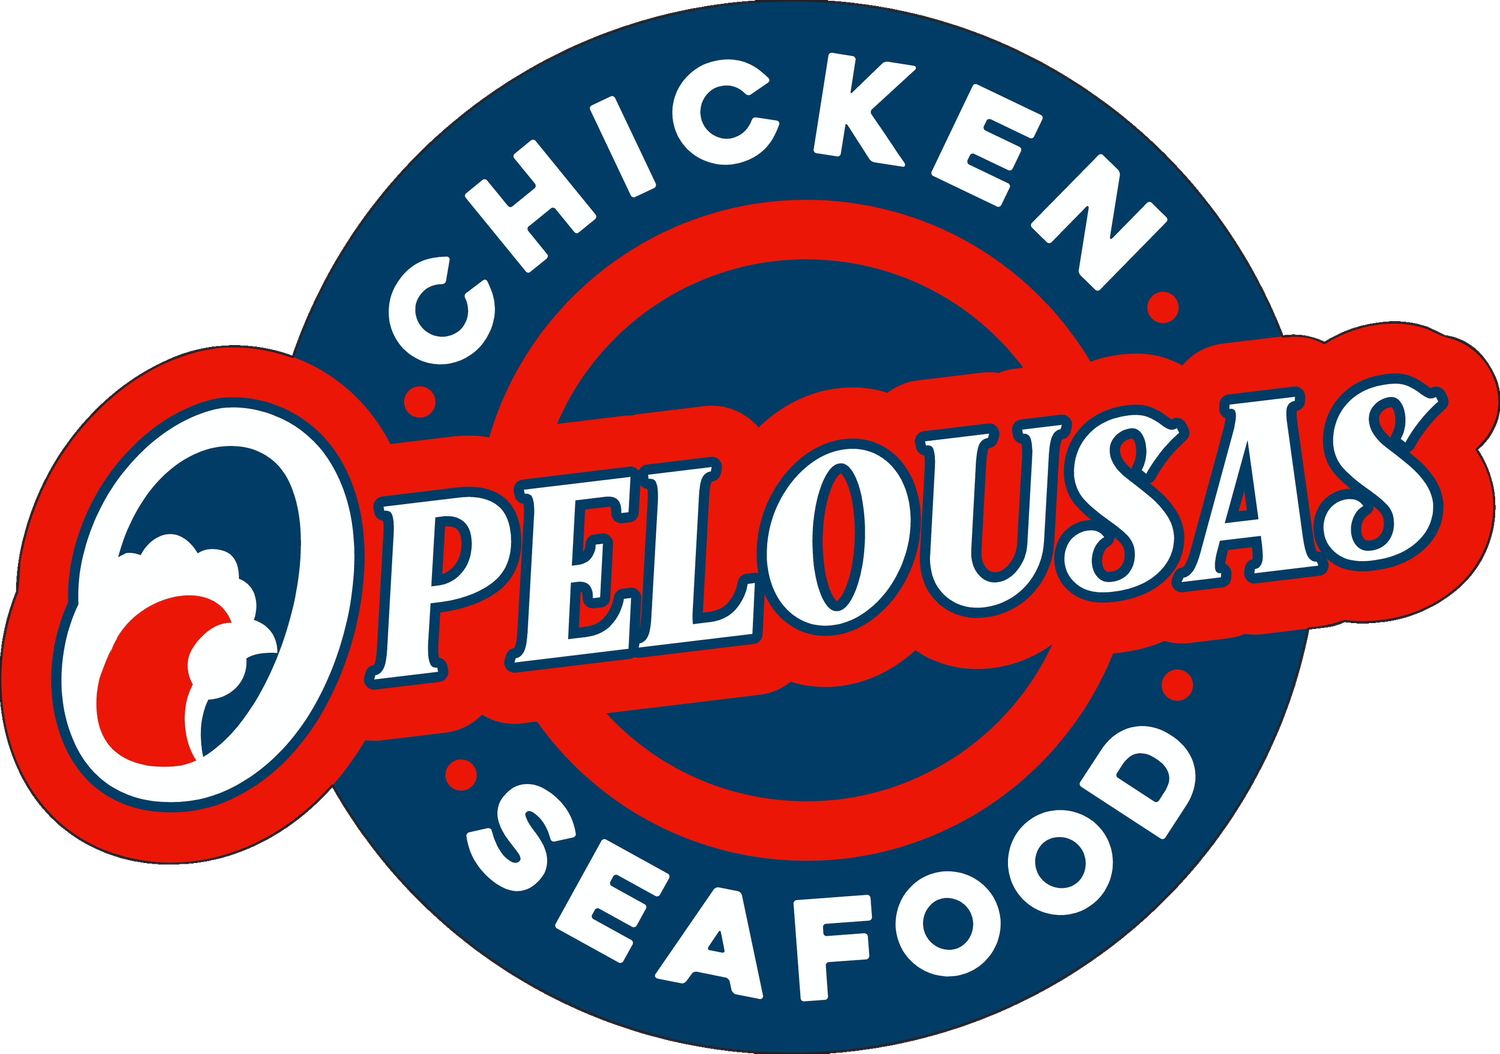 Opelousas Chicken &amp; Seafood